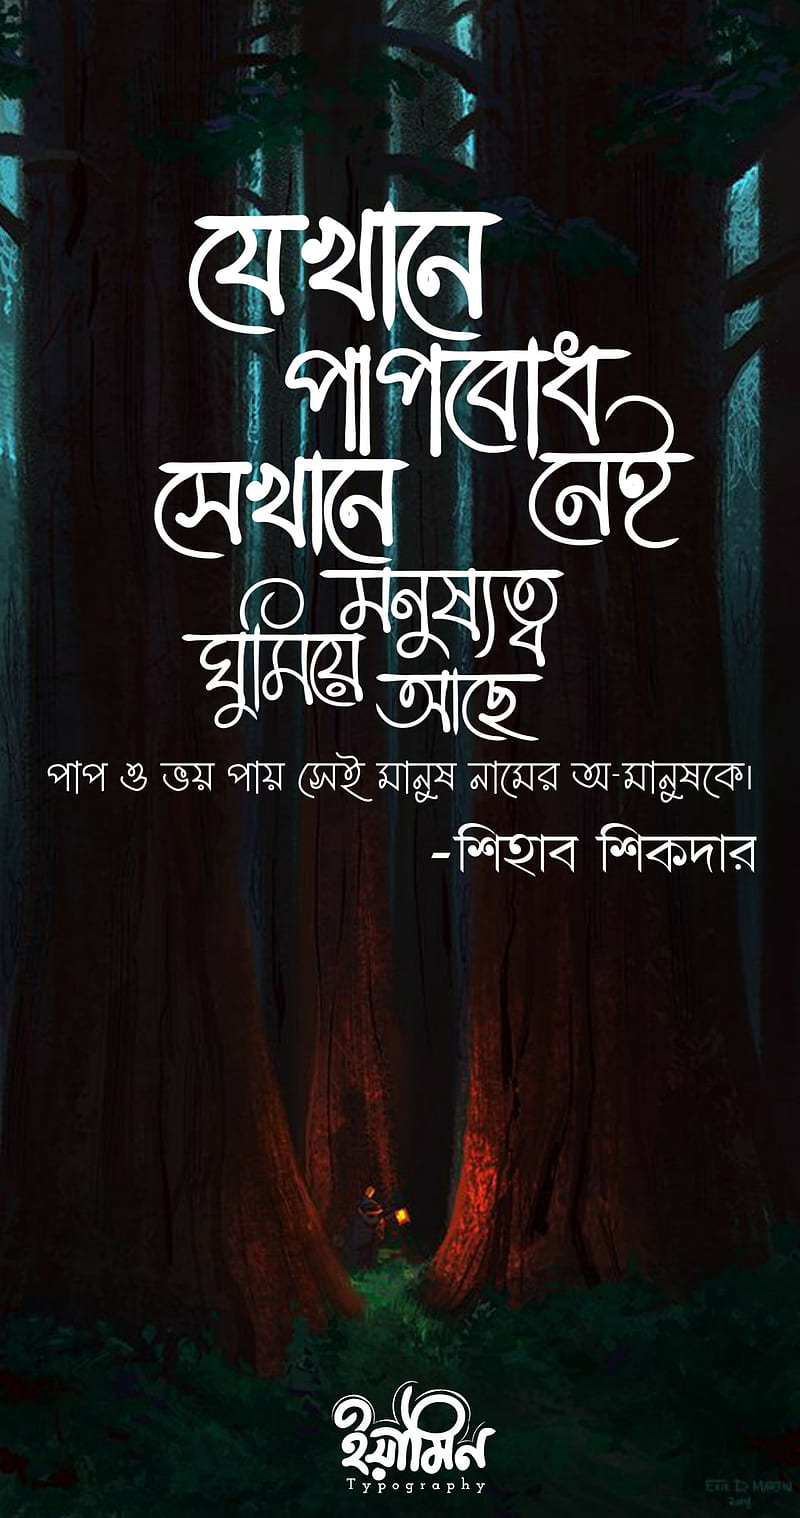 Bangla quotes, bangla typography, bangla, friend, hope, love ...